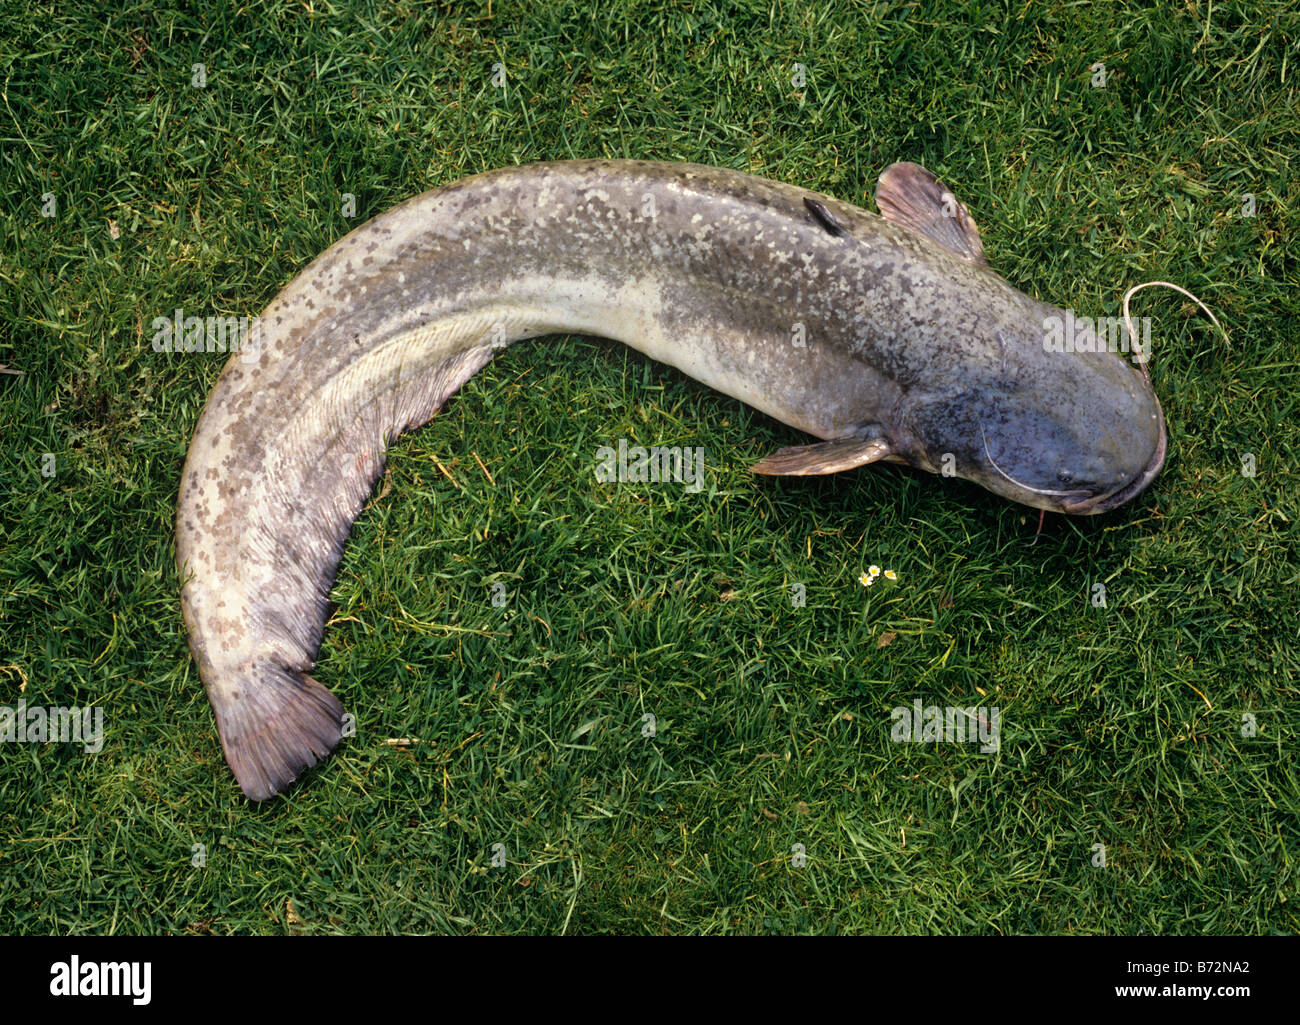 Wels Catfish from Claydon Lakes Buckinghamshire UK photographed 19 June Stock Photo